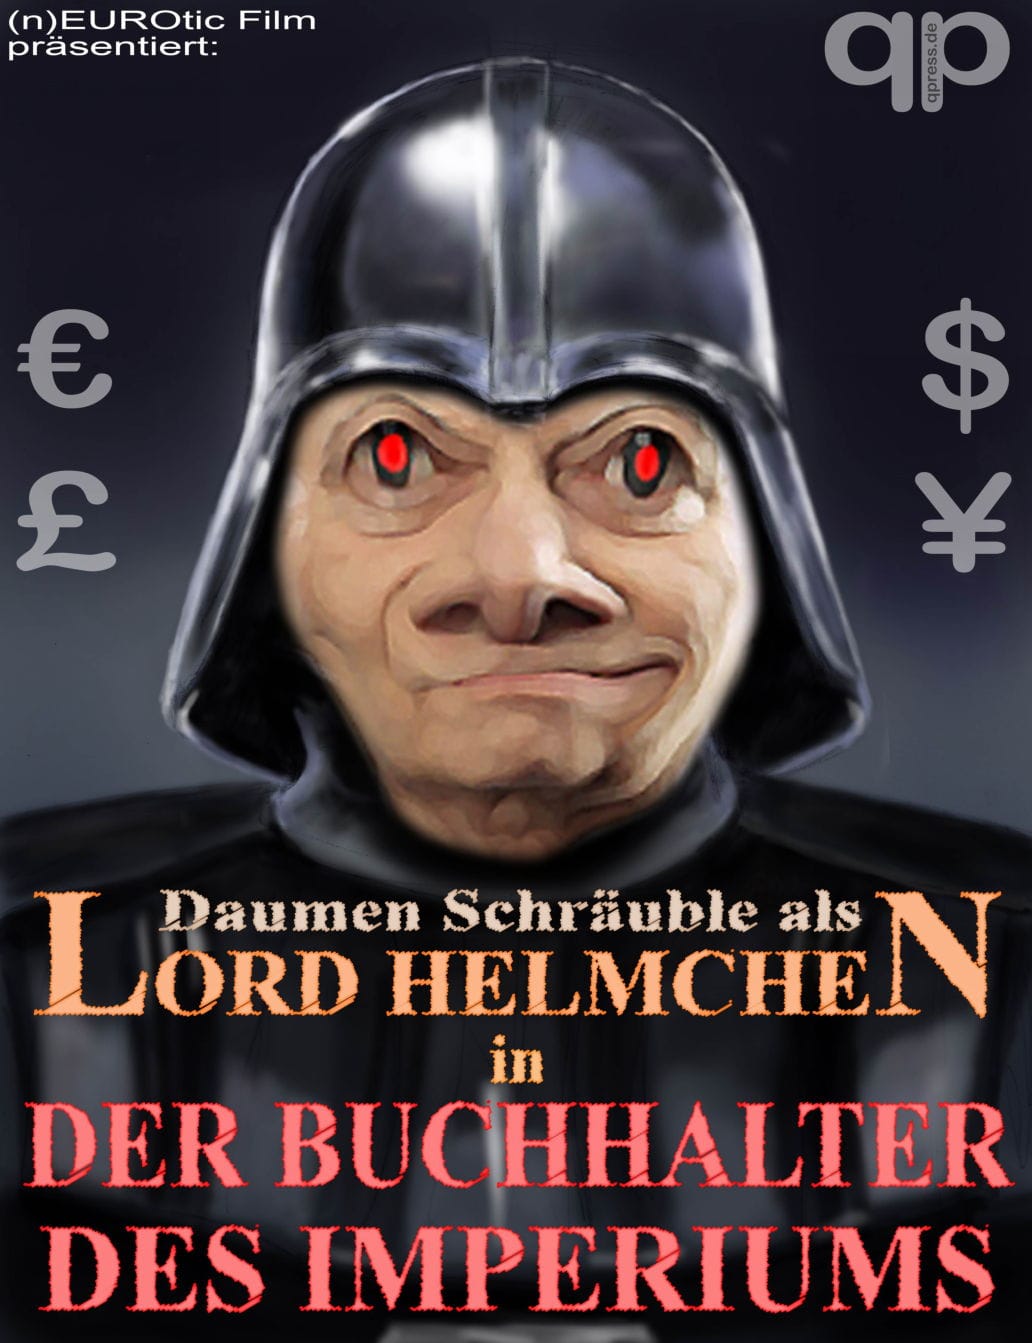 Darth_Vader_Lord_Helmchen qp